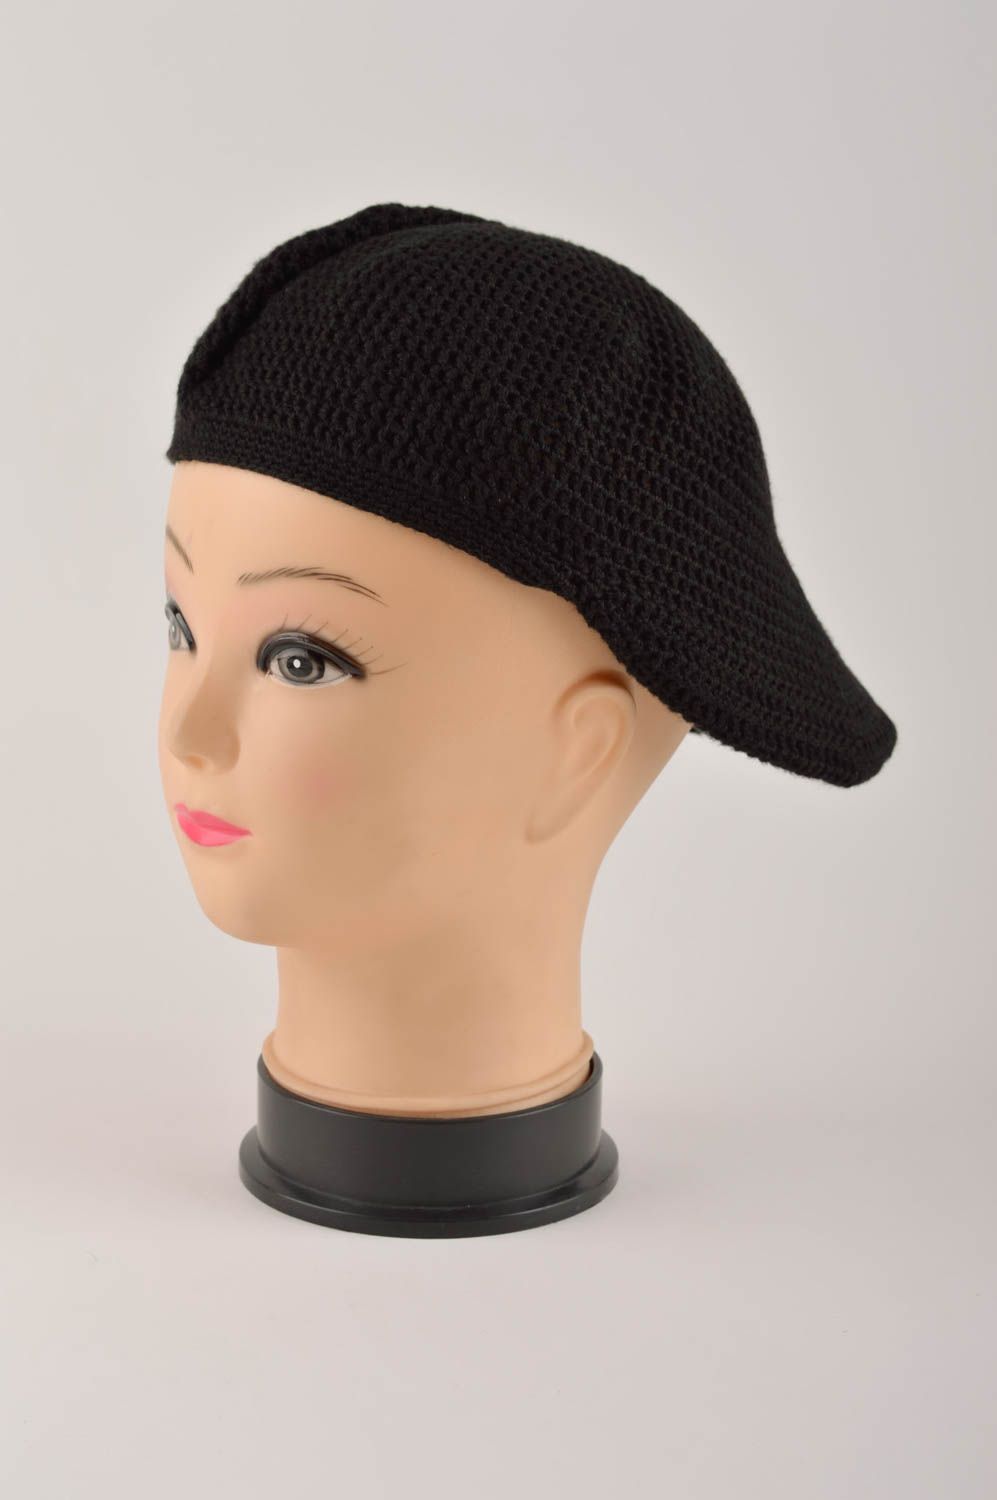 Handmade hat designer cap unusual gift ideas women hat summer hat for girls photo 5